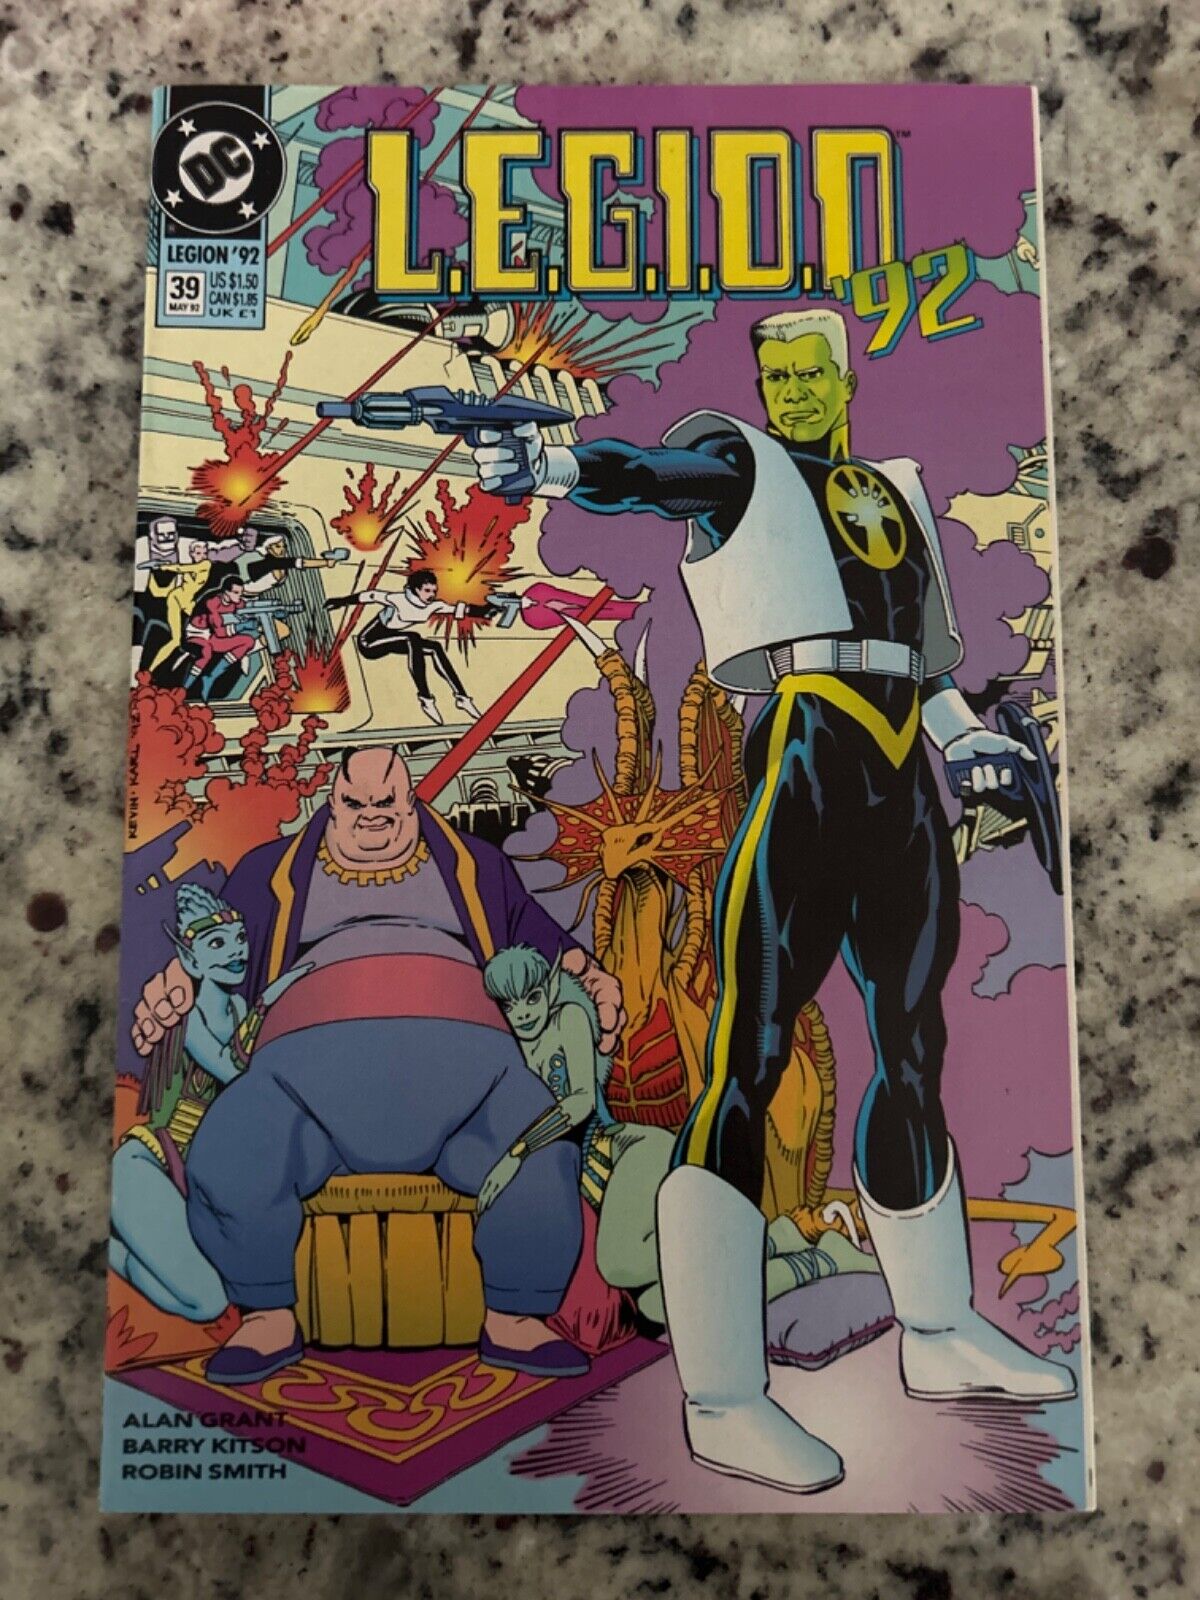 L.E.G.I.O.N. #39 Vol. 1 (DC, 1992) vf